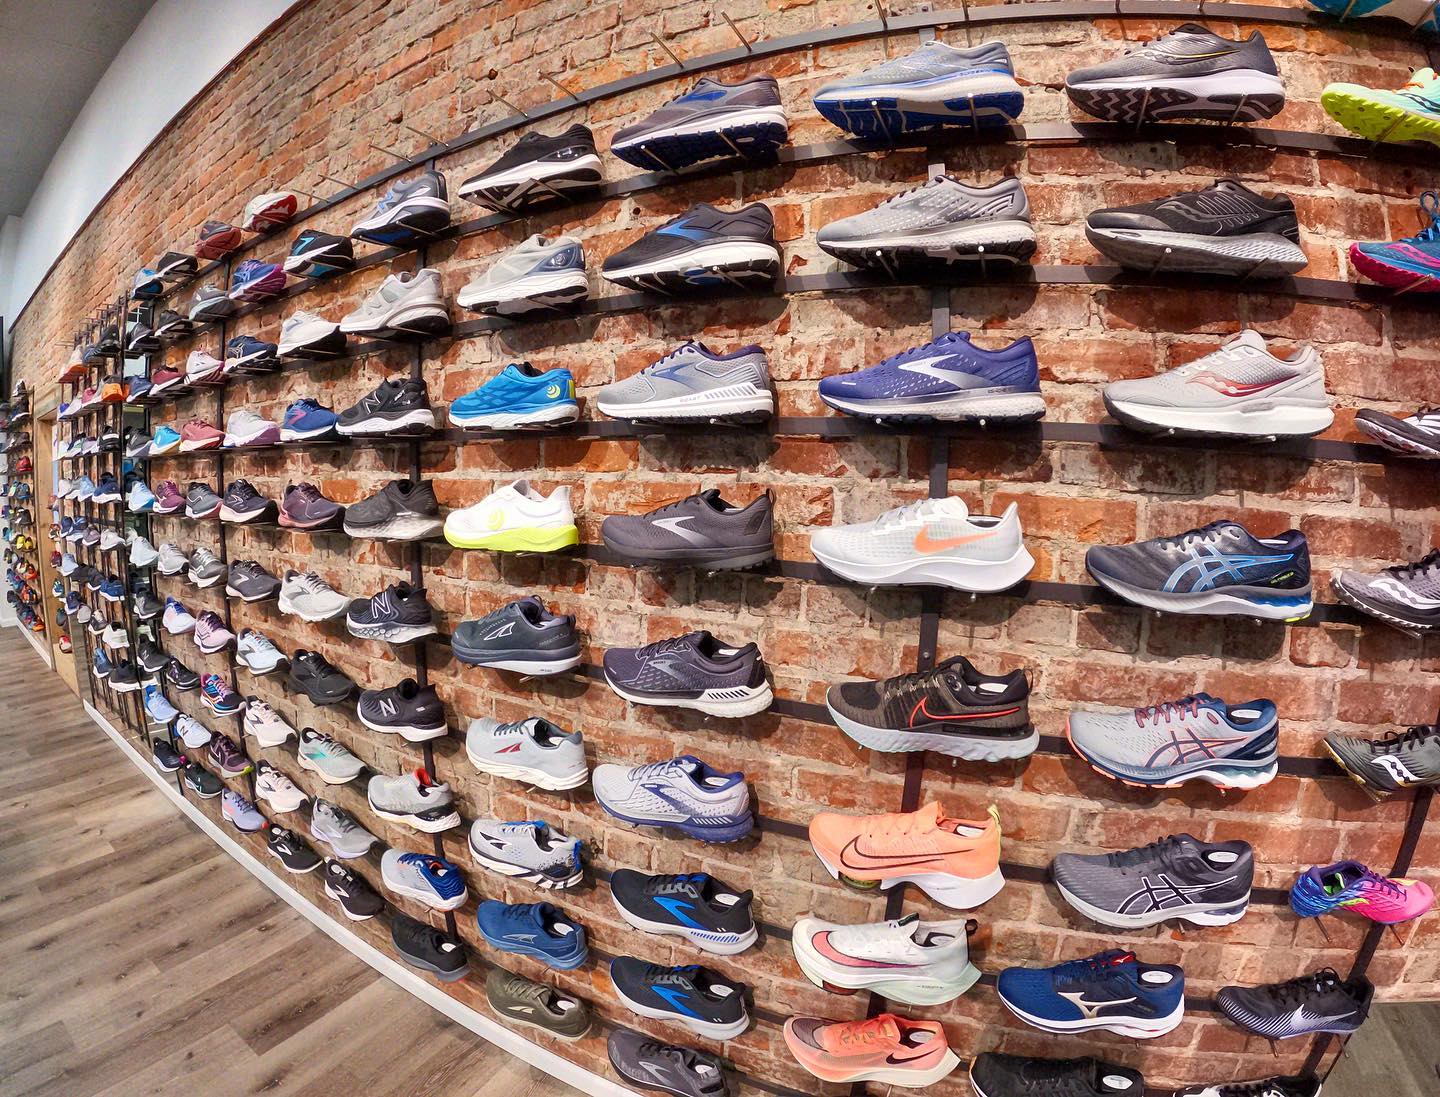 Choosing the Right Running Shoe